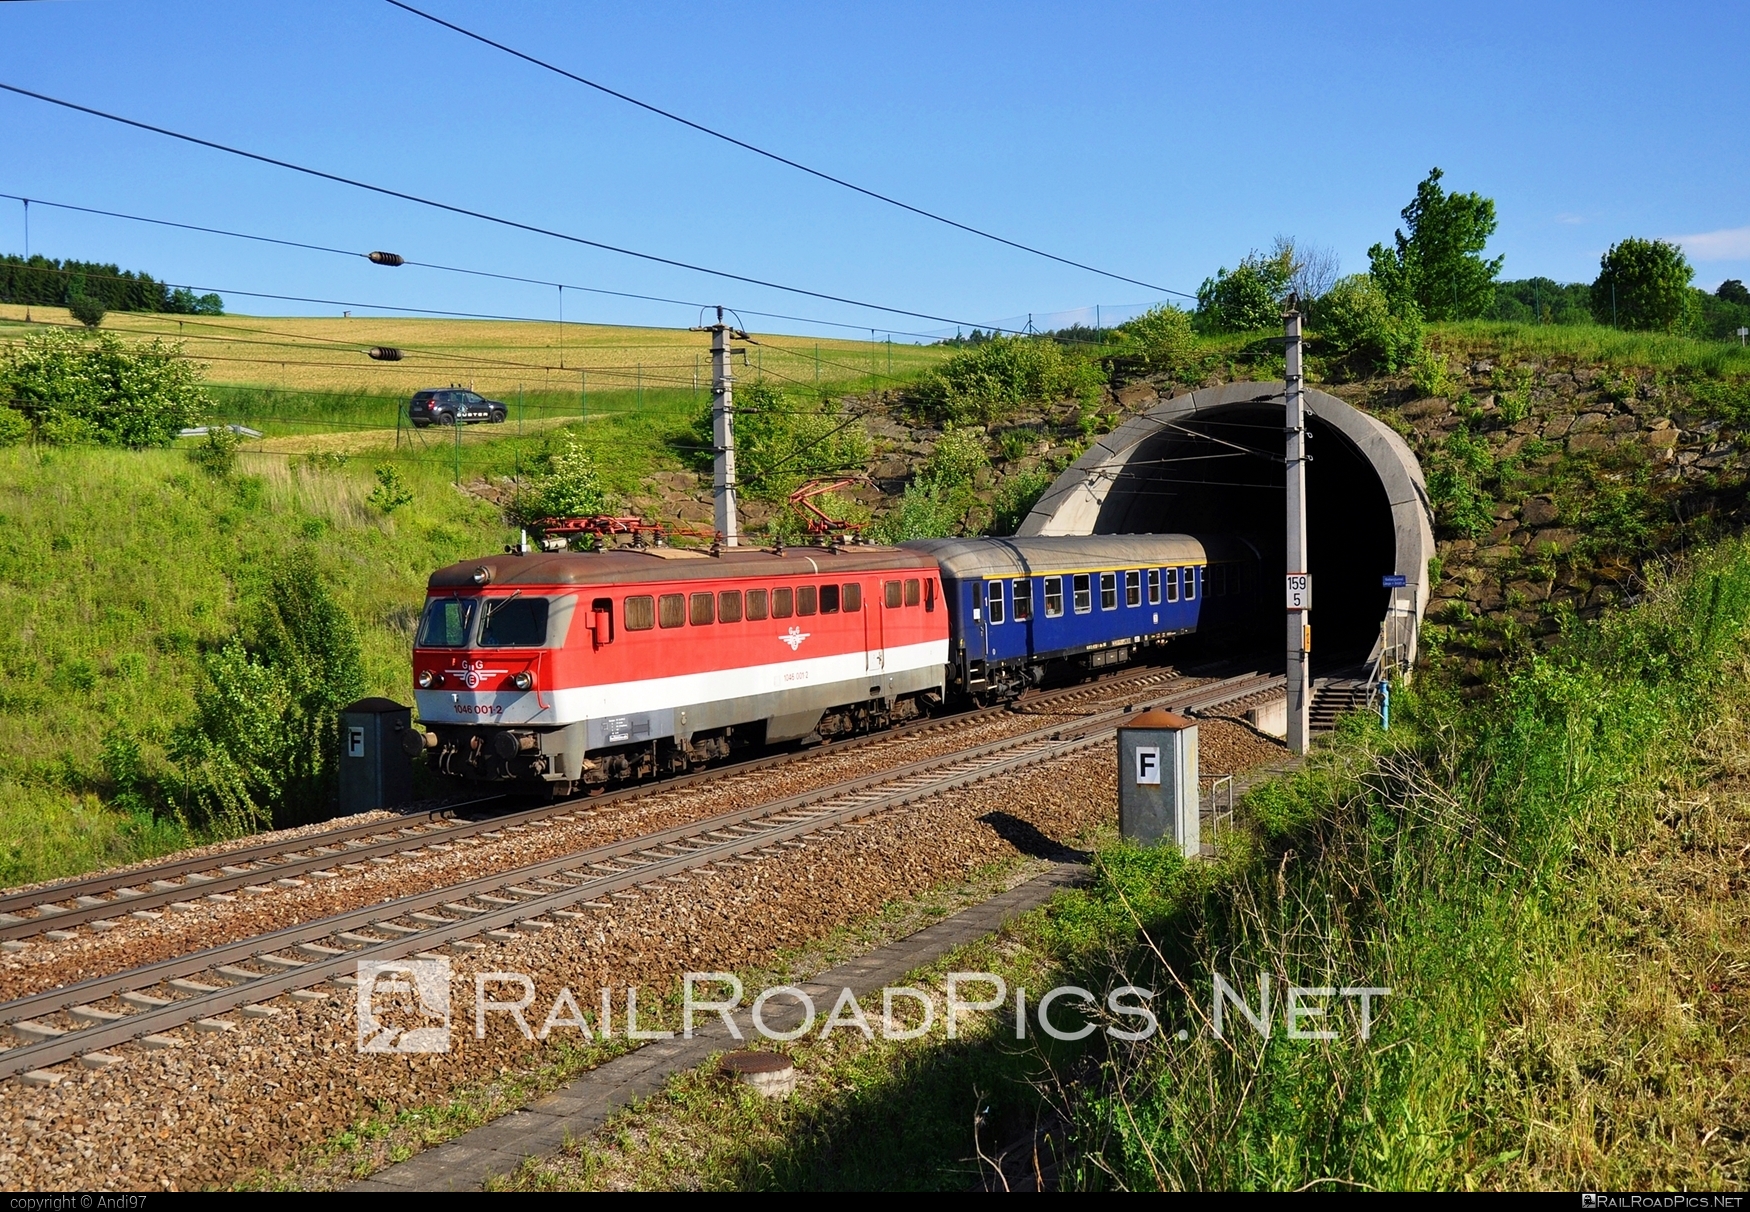 ÖBB Class 1046 - 1046 001-2 operated by Österreichische Gesellschaft für Eisenbahngeschichte (ÖGEG) #obbClass1046 #ogeg #tunnel